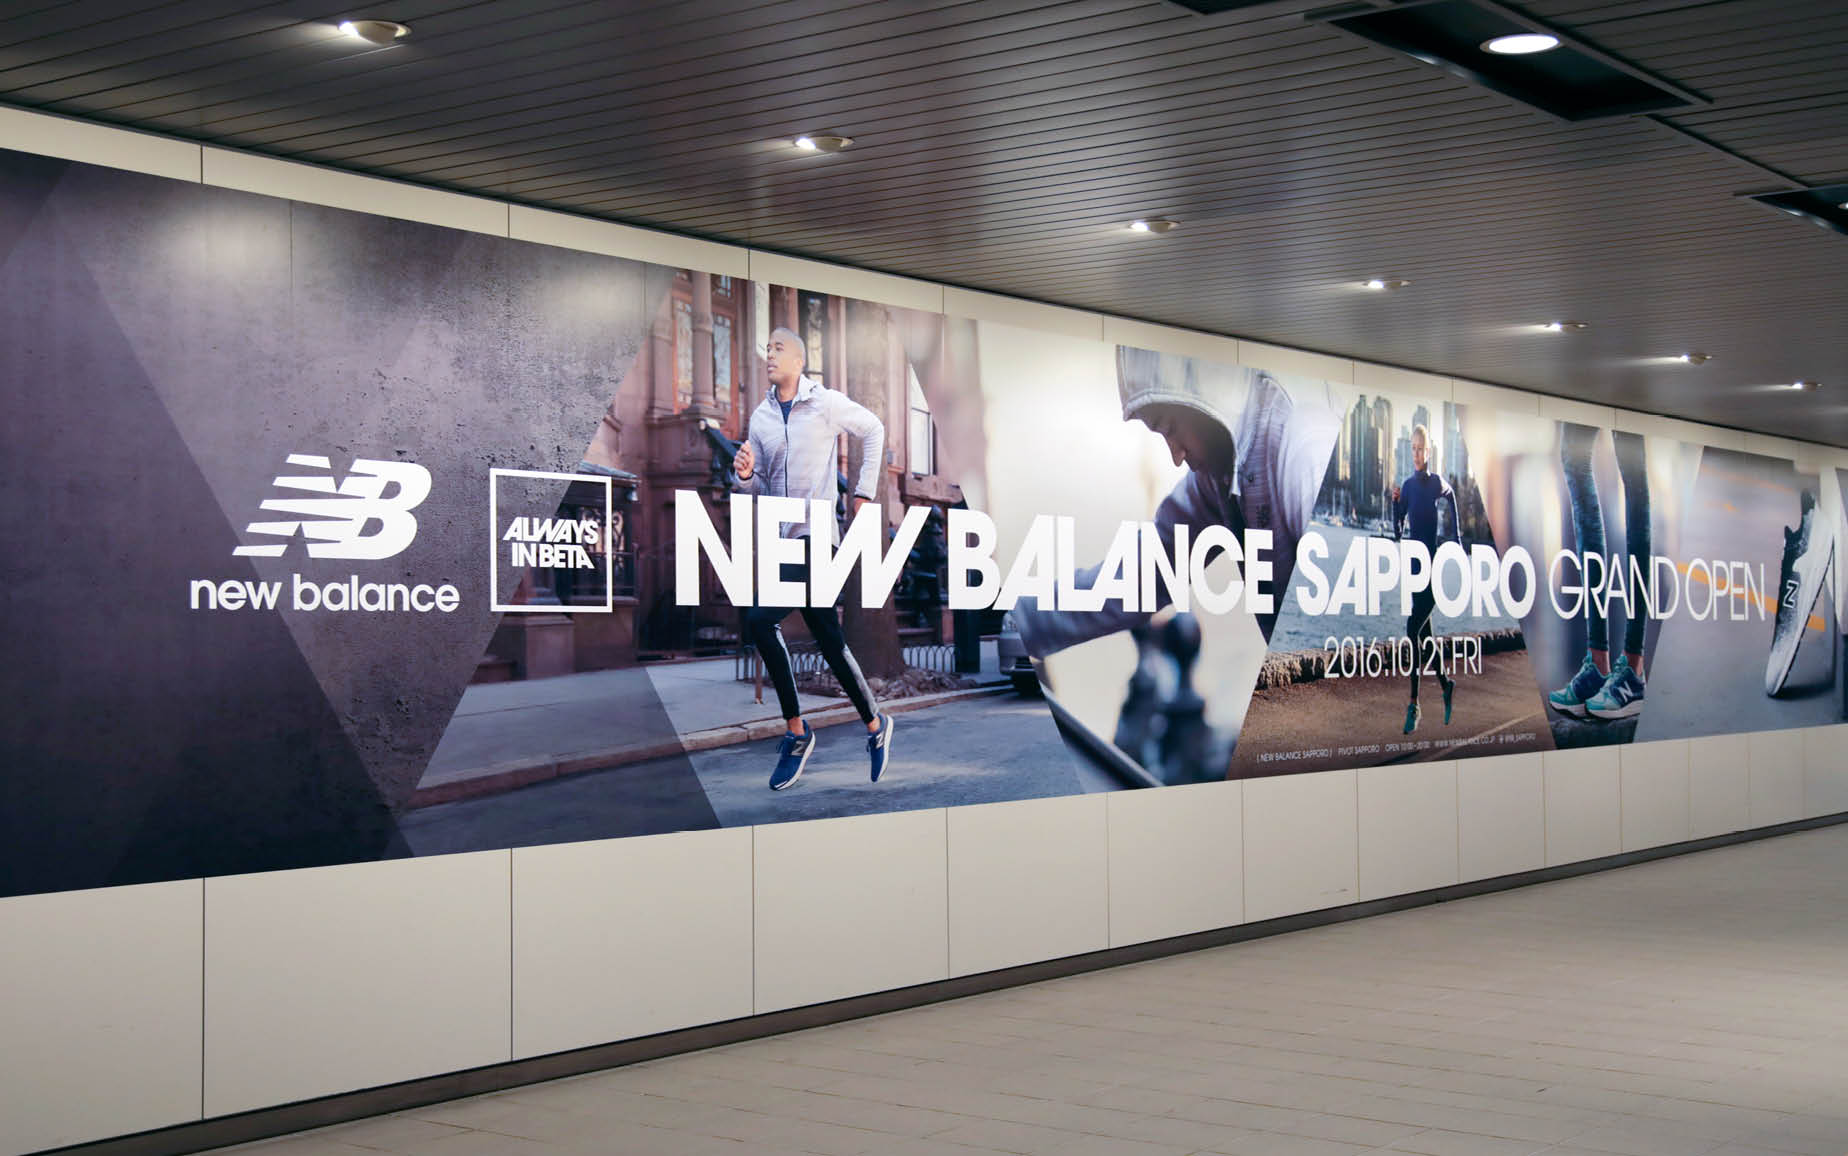 New Balance advertising billboards